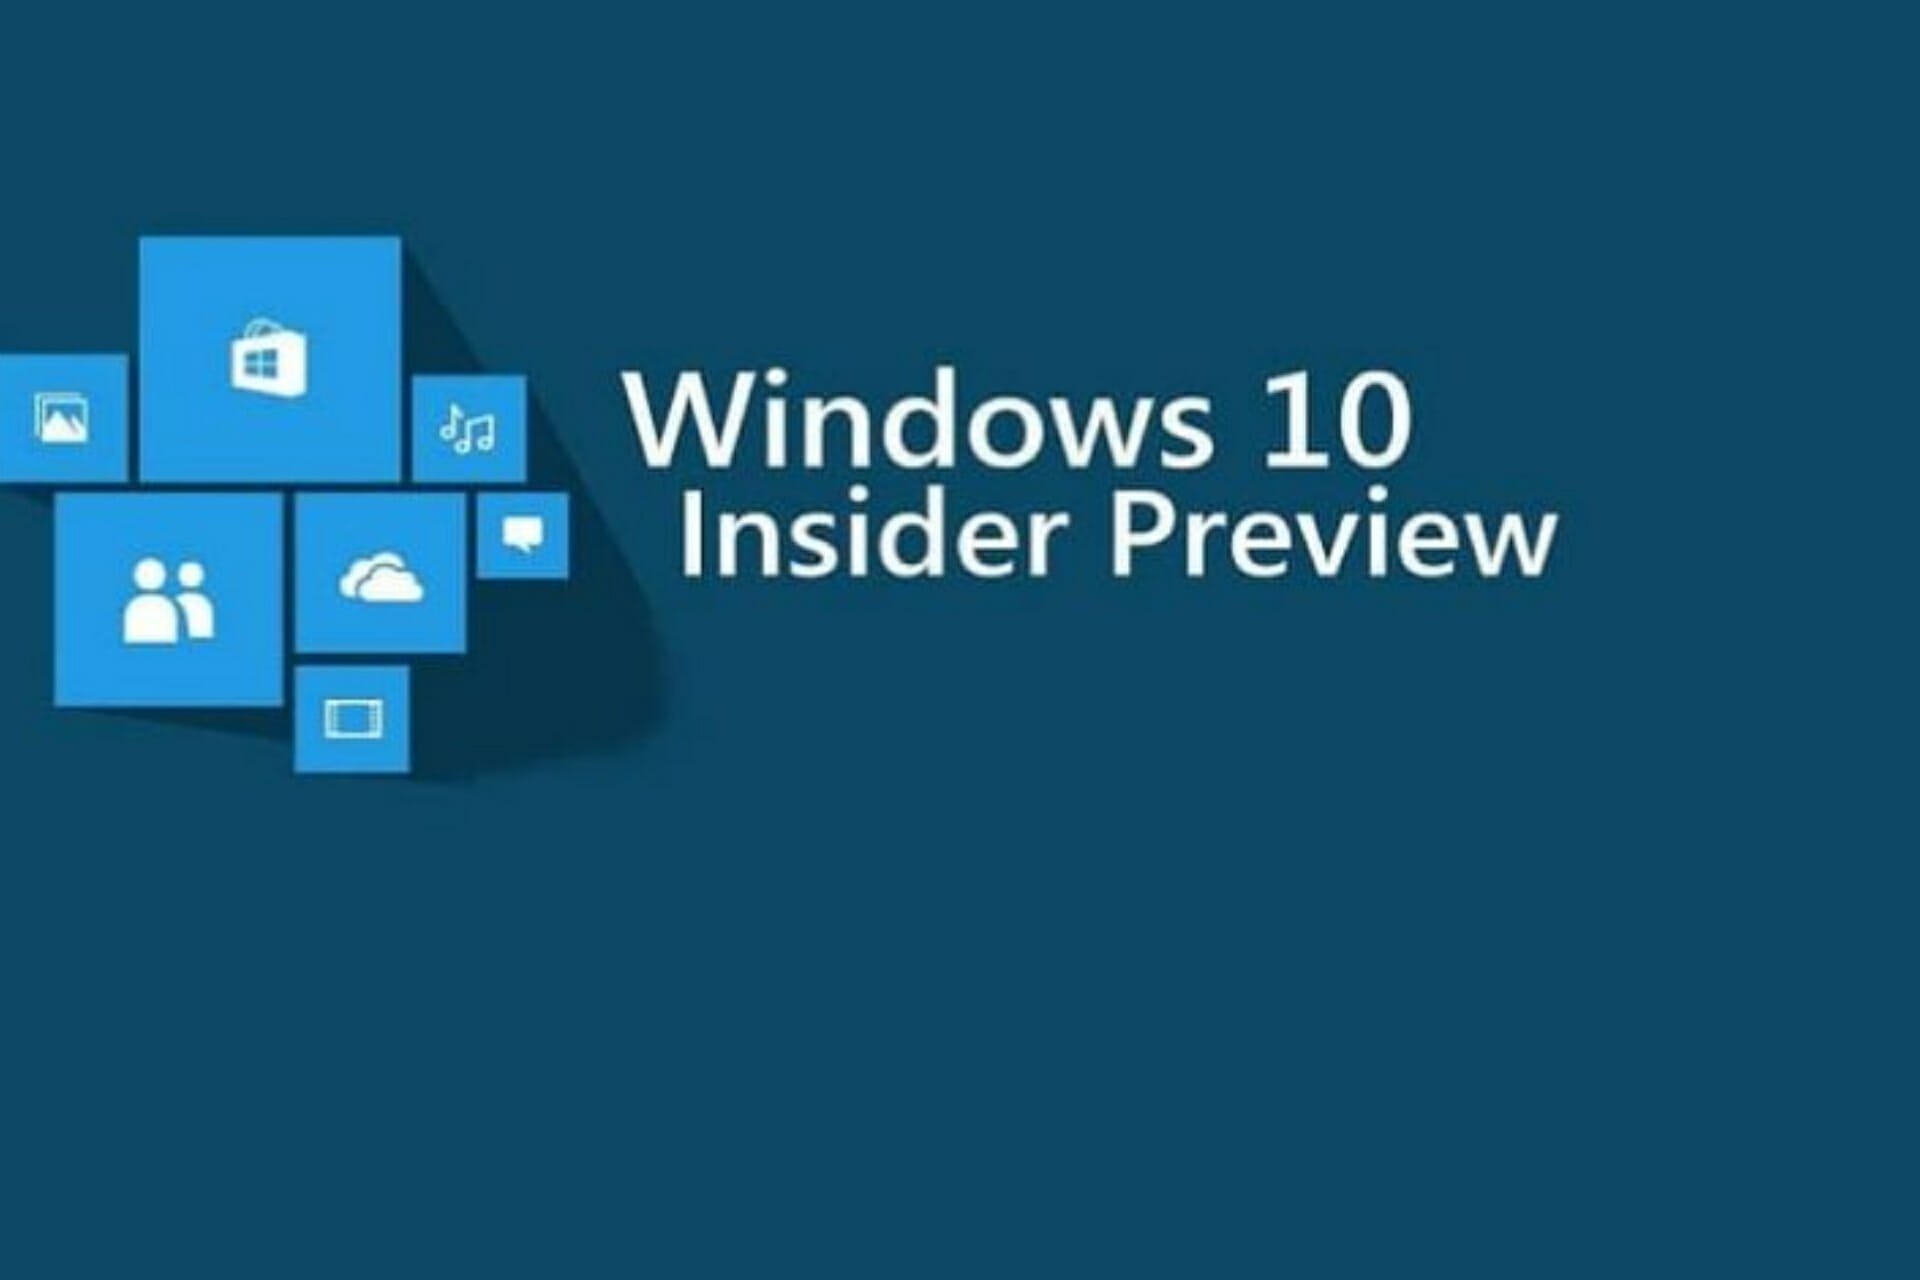 windows 10 insider